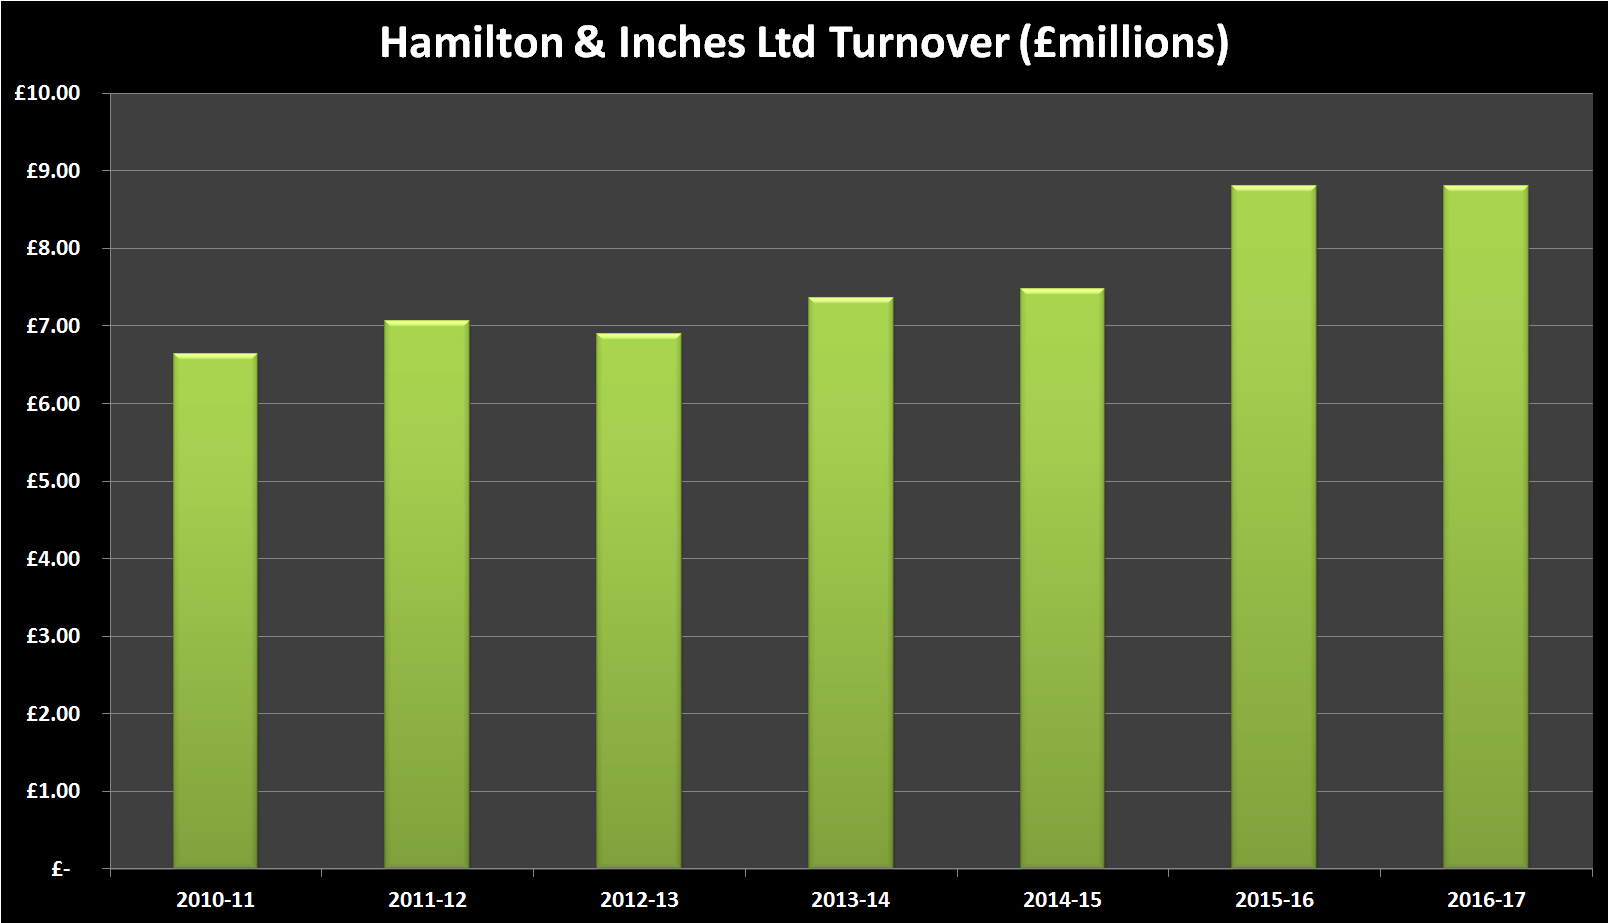 Hamilton & inches financial history - turnover